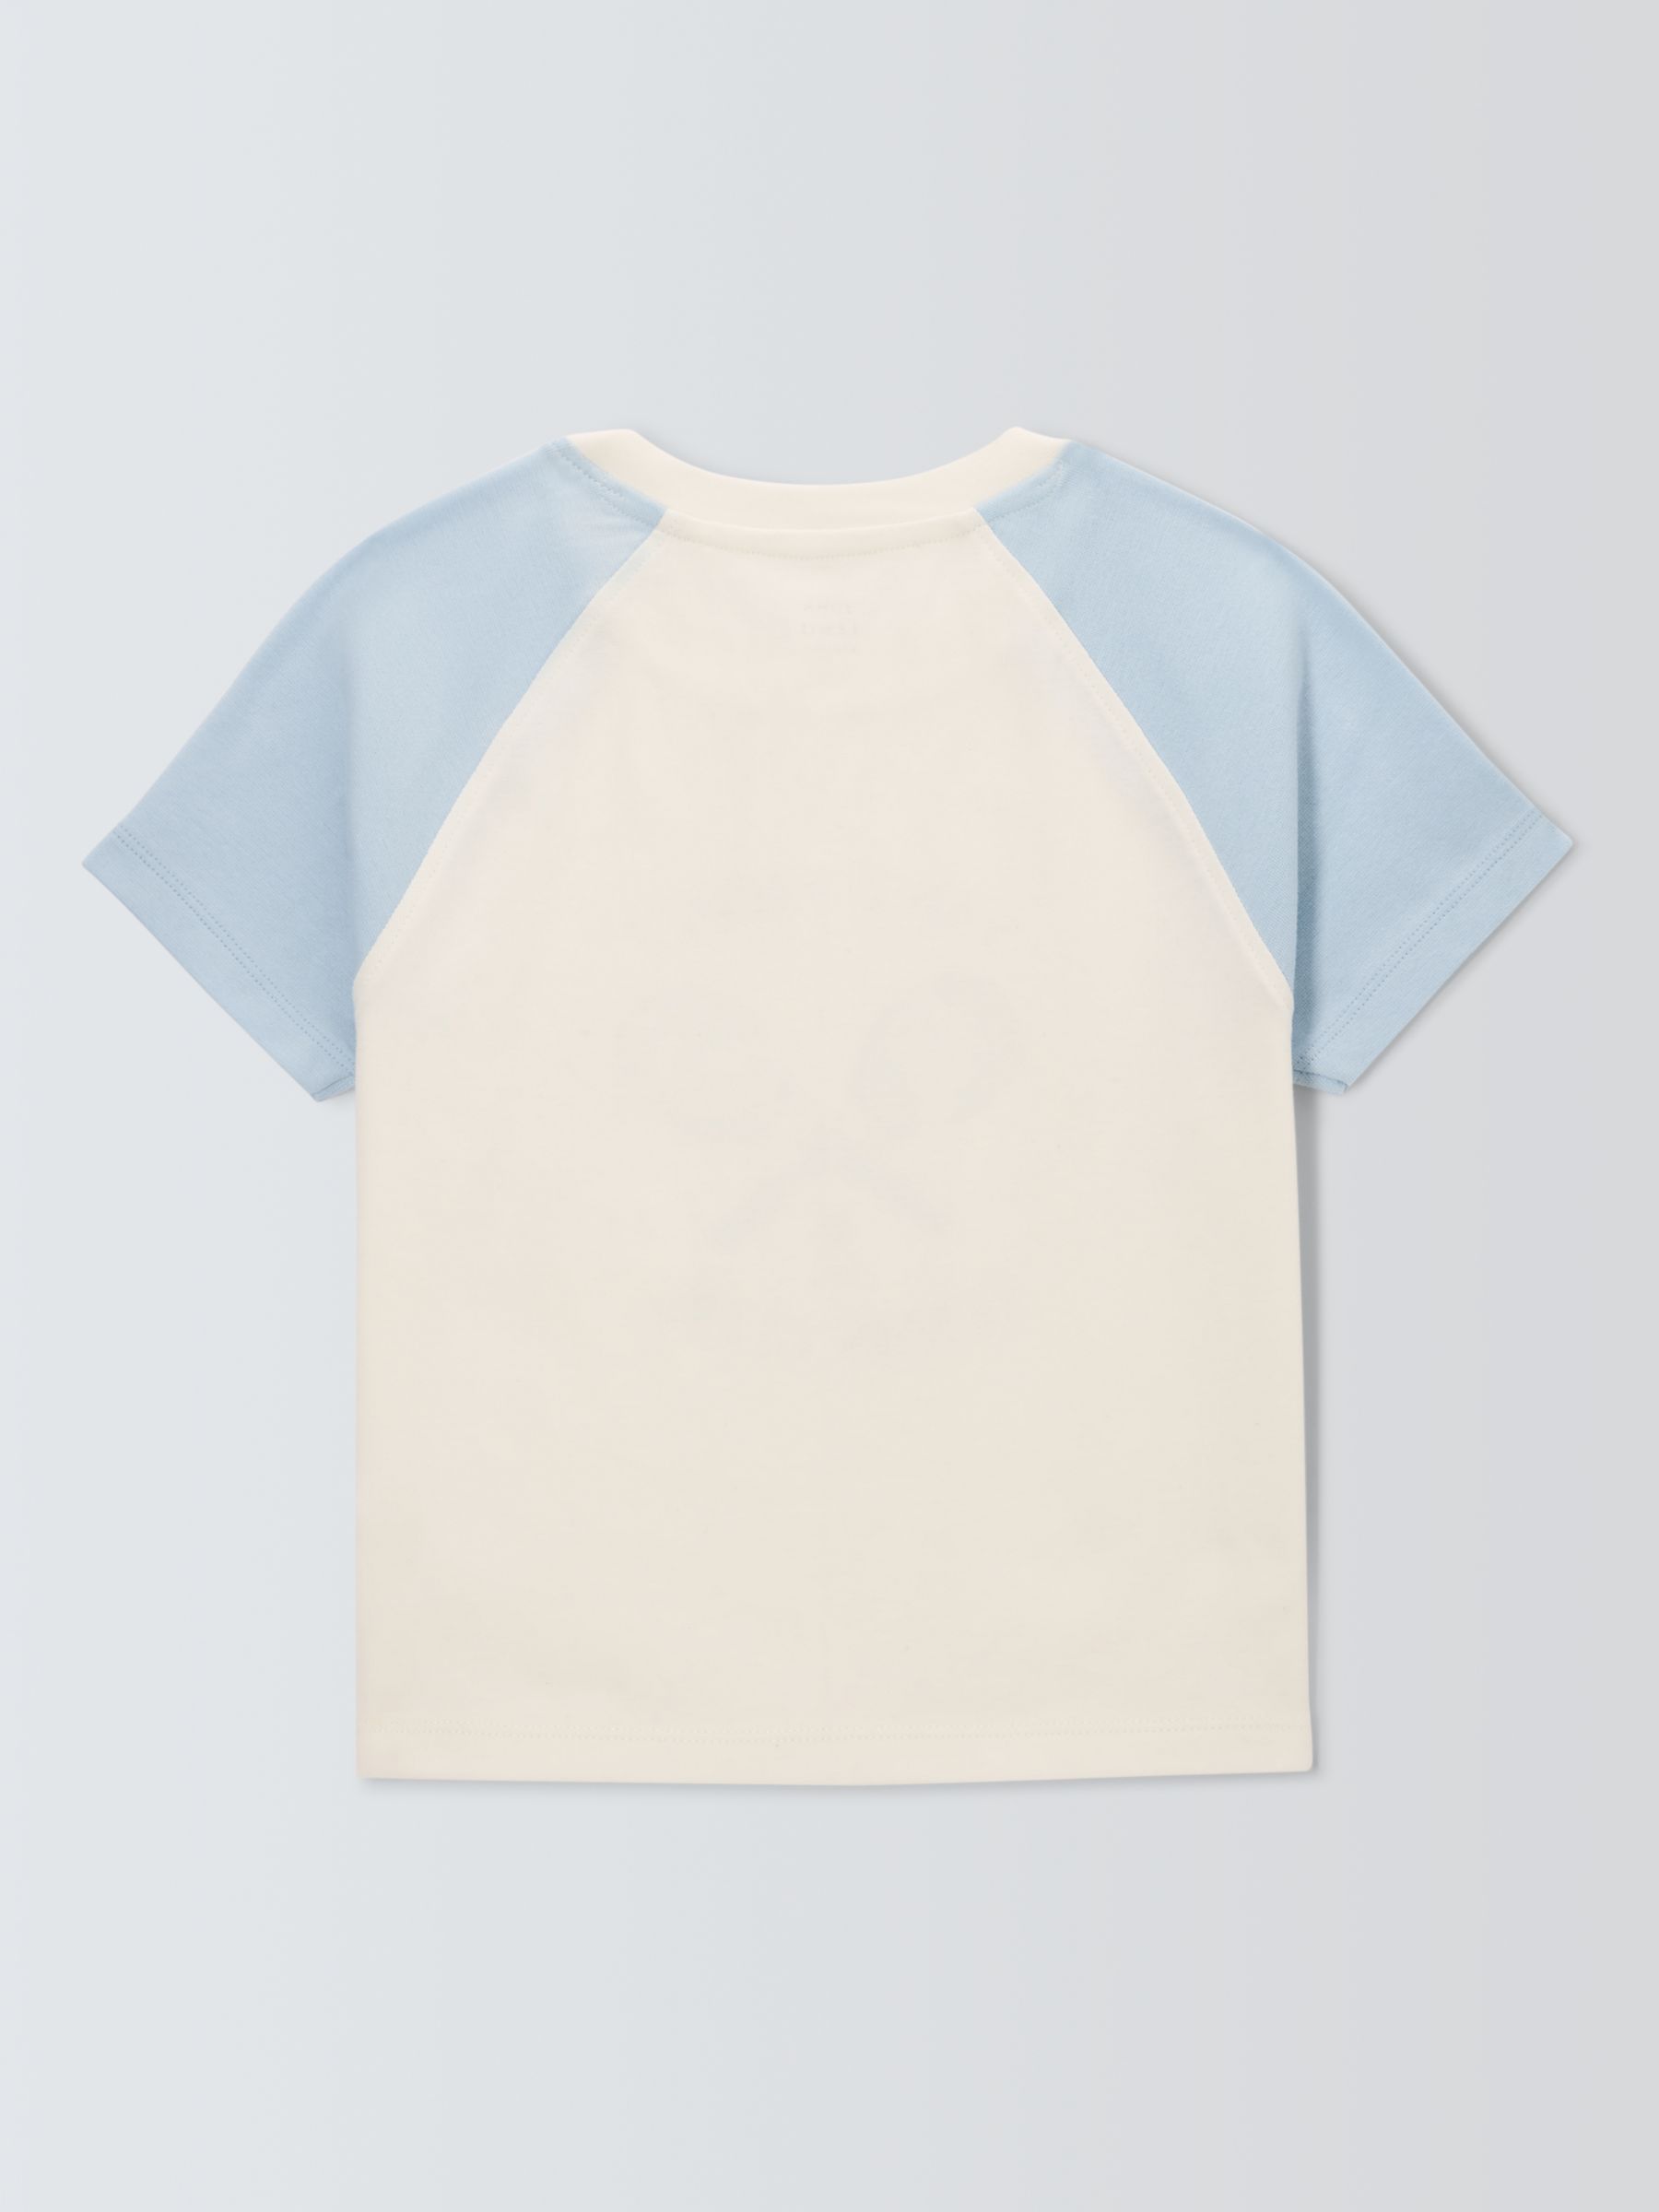 John Lewis Kids' Saint Tropez Tennis Graphic T-Shirt, Snow White/Egret, 12 years